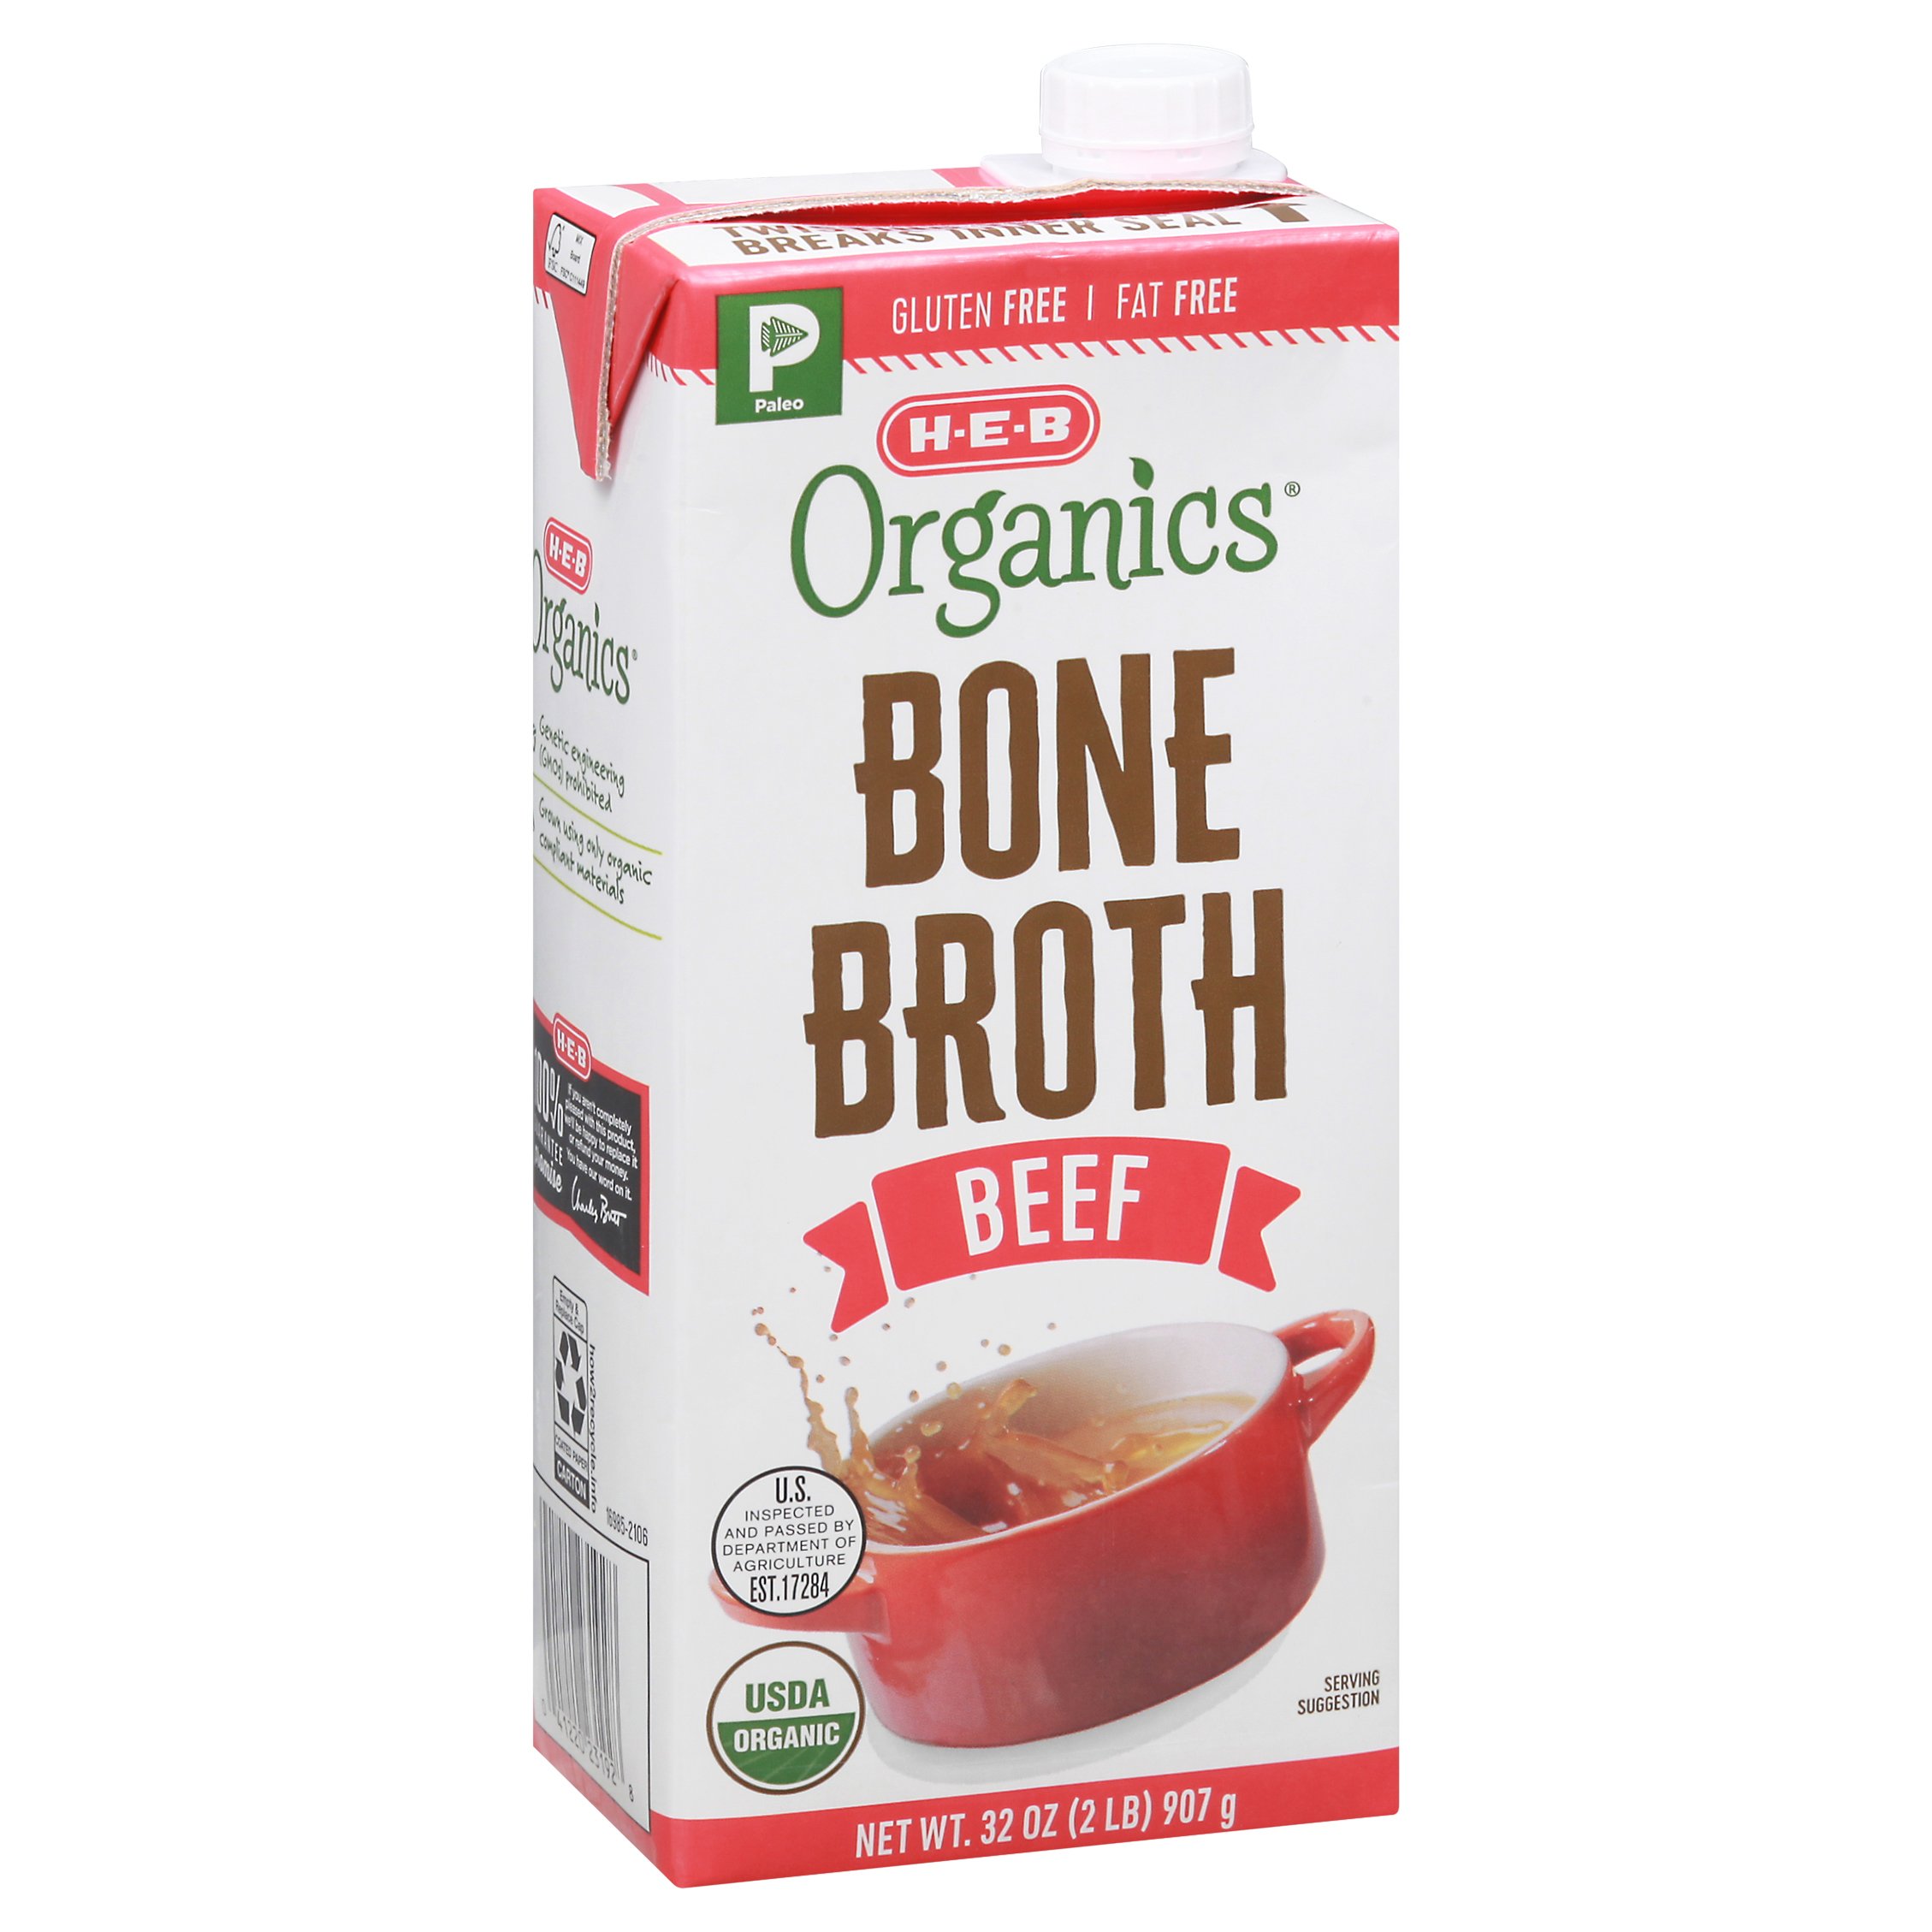 H-E-B Organics Beef Bone Broth - Shop Broth & Bouillon at H-E-B